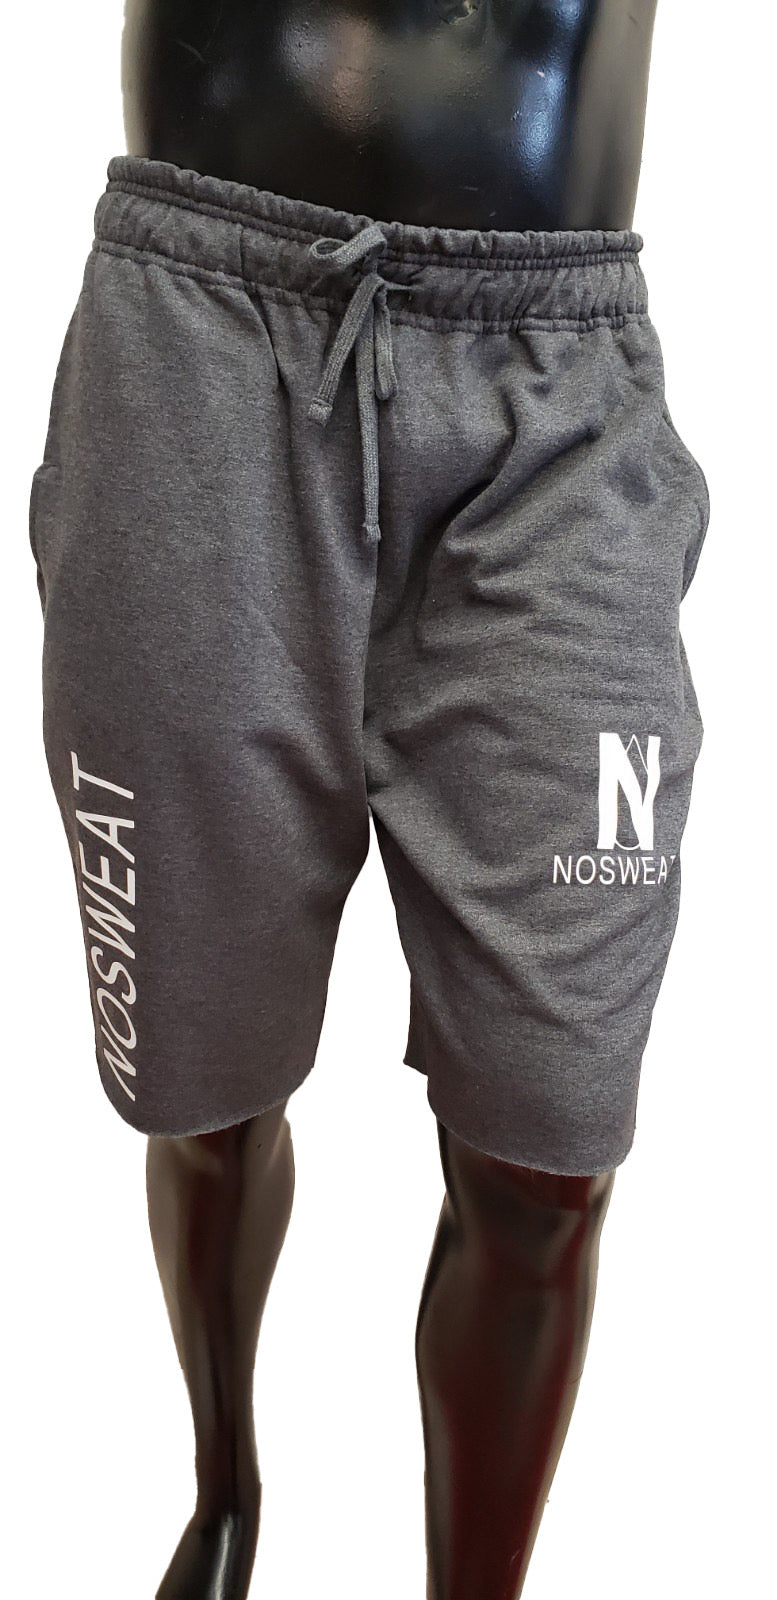 Mens Nosweat Shorts